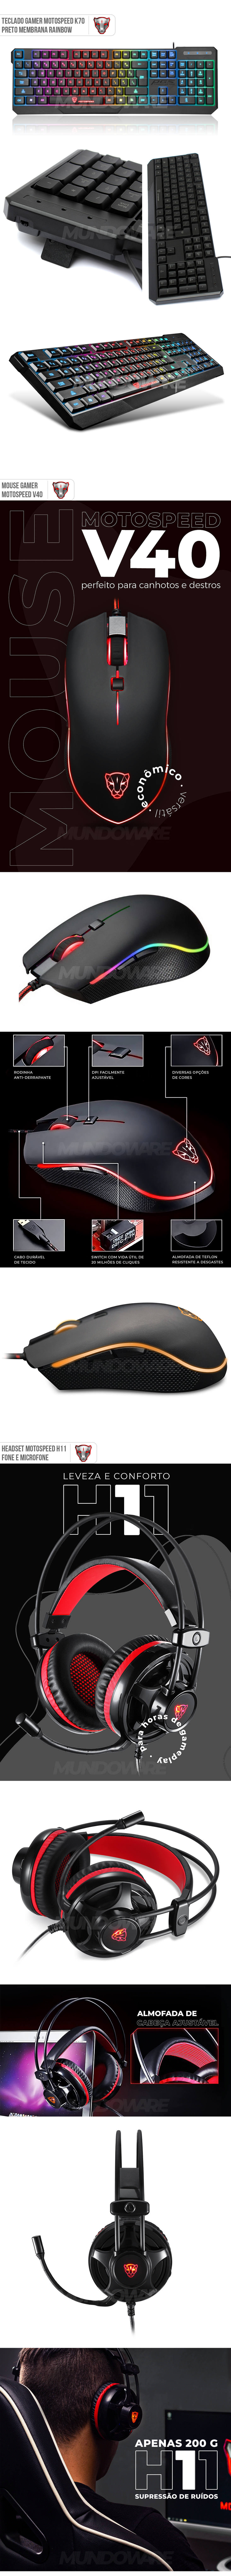 Kit Gamer Motospeed com Teclado K70 Membrana LED Rainbow + Mouse V40 4000DPI + Headset H11 5.1 Virtual Surround Preto